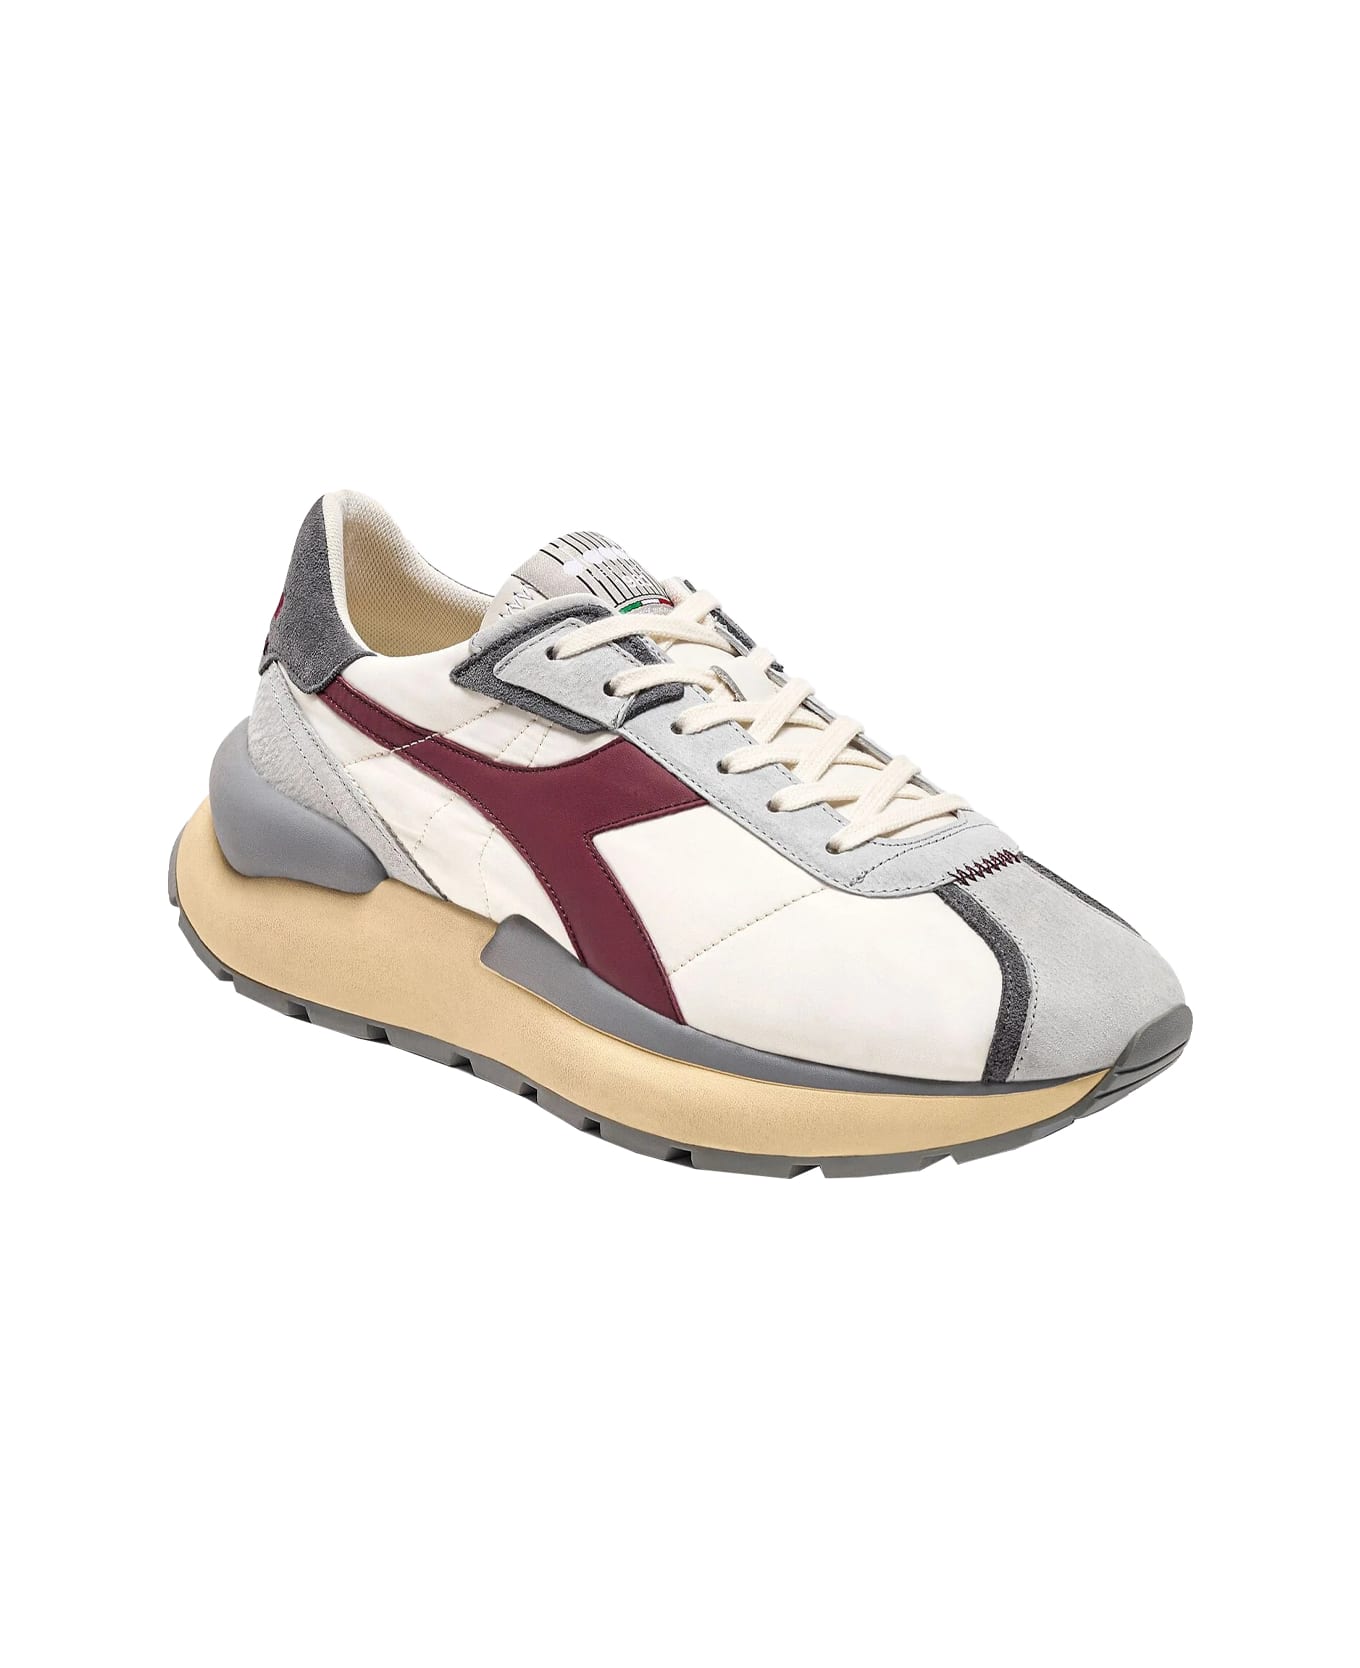 Diadora Sneakers - Bianco Rosso Tibetano スニーカー